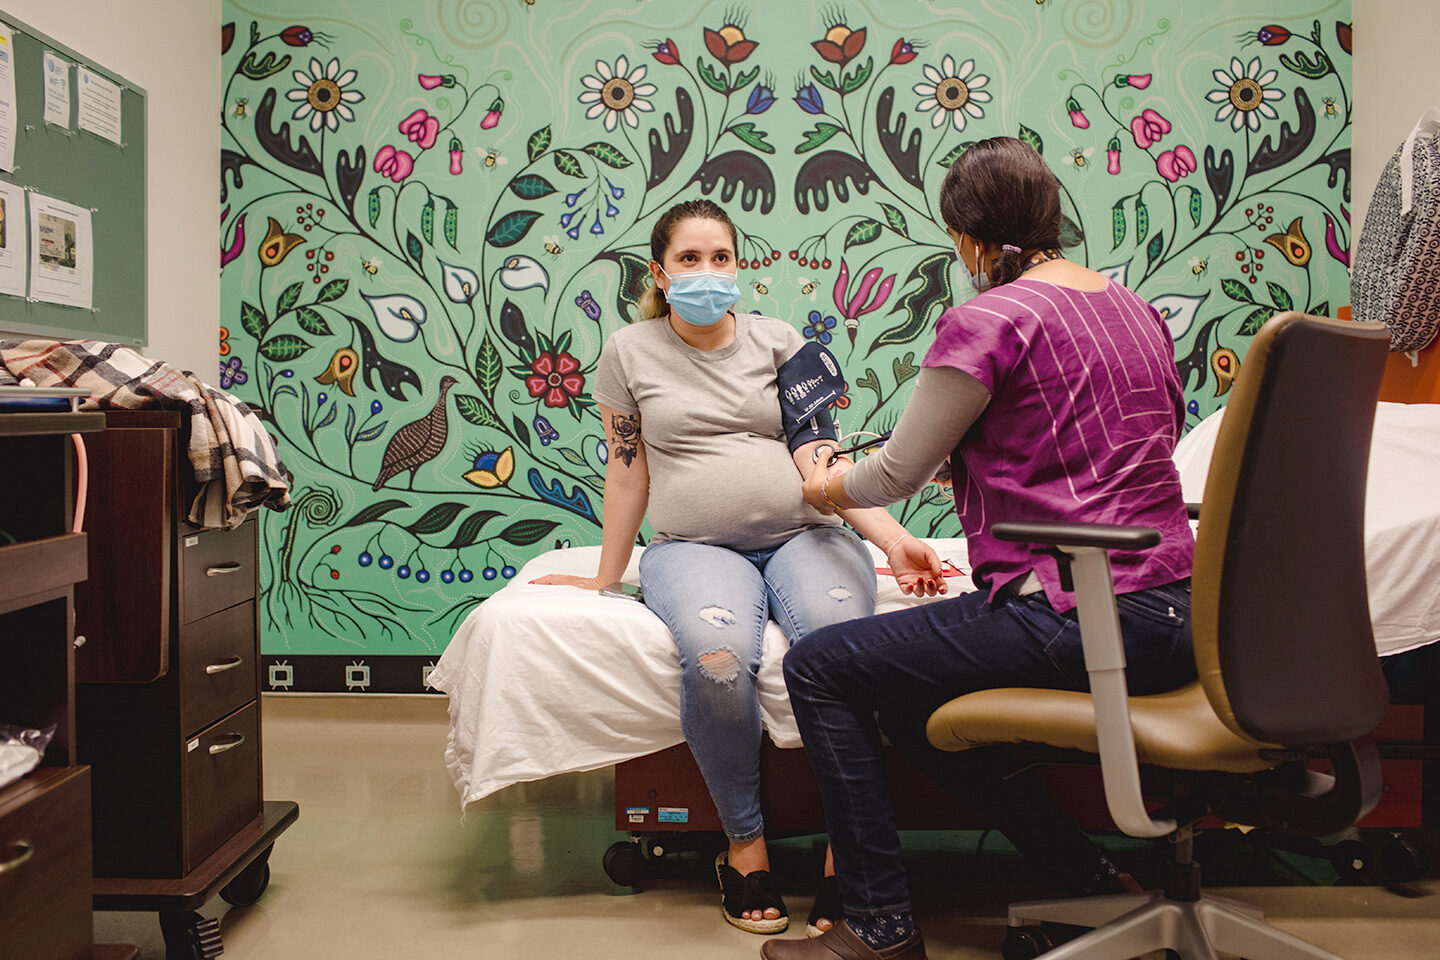 Midwife Laura Solis meets client Vianey De La Torre for a prenatal checkup at the Toronto Birth Centre